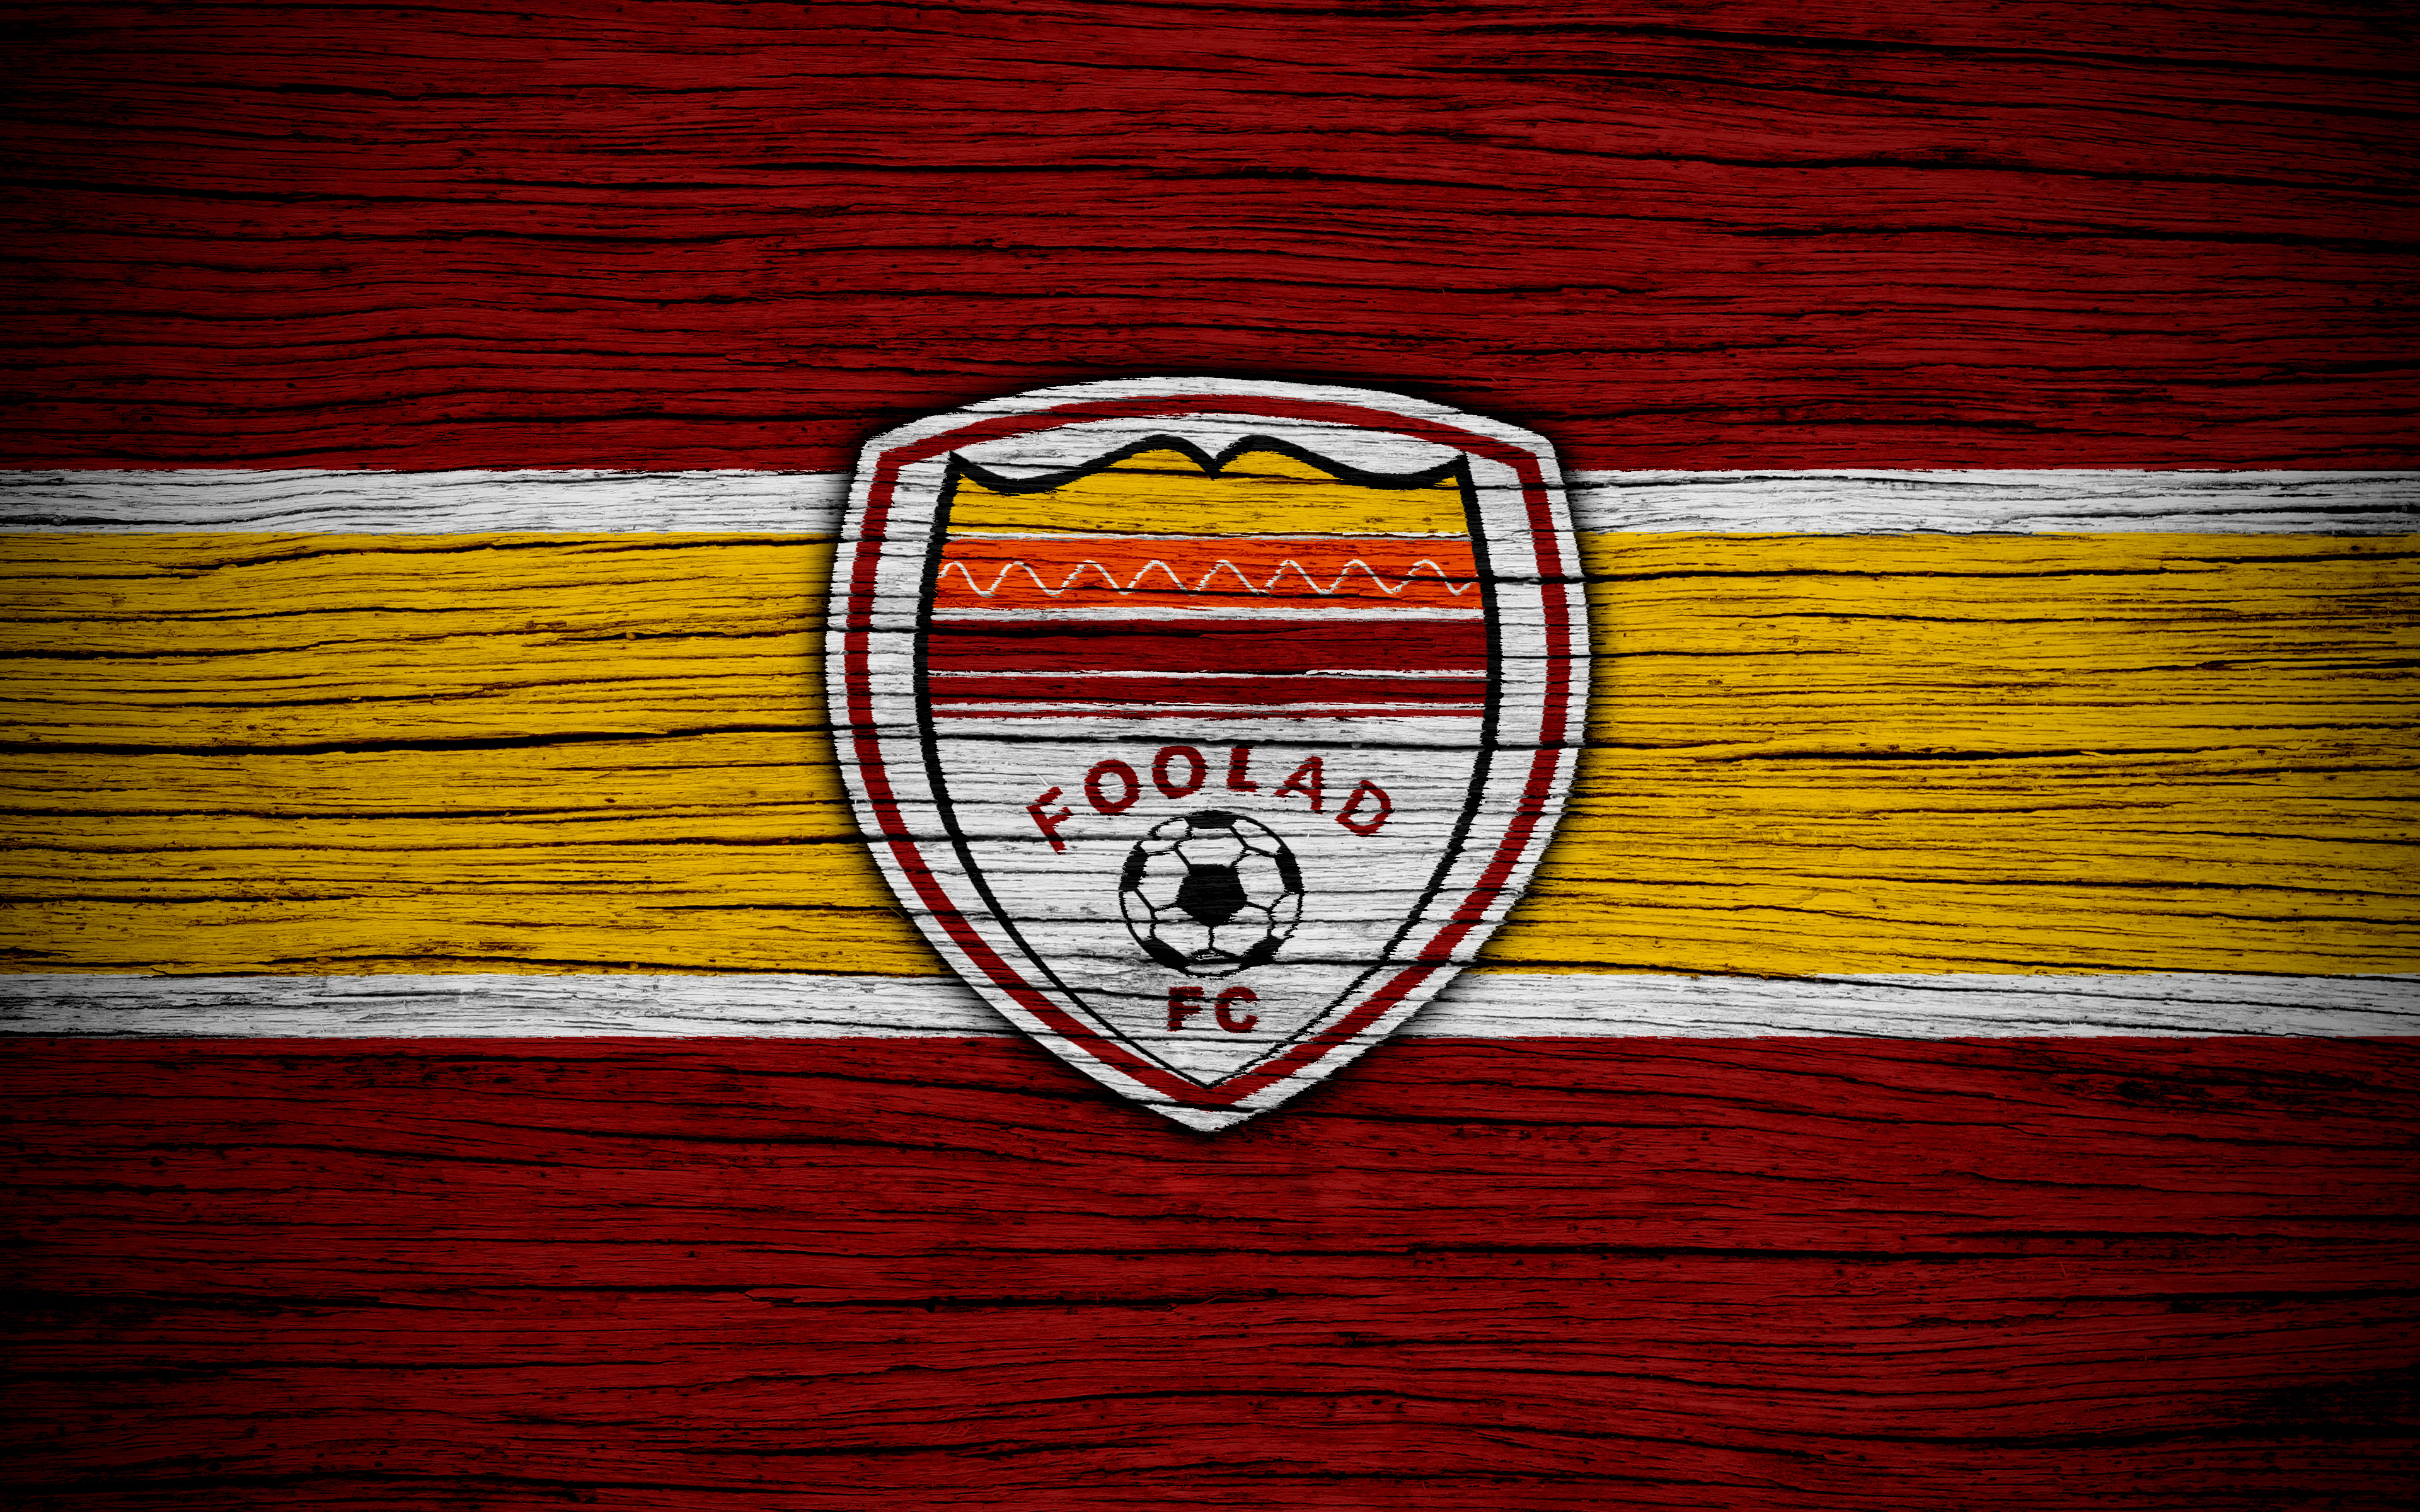 Foolad FC - Club profile